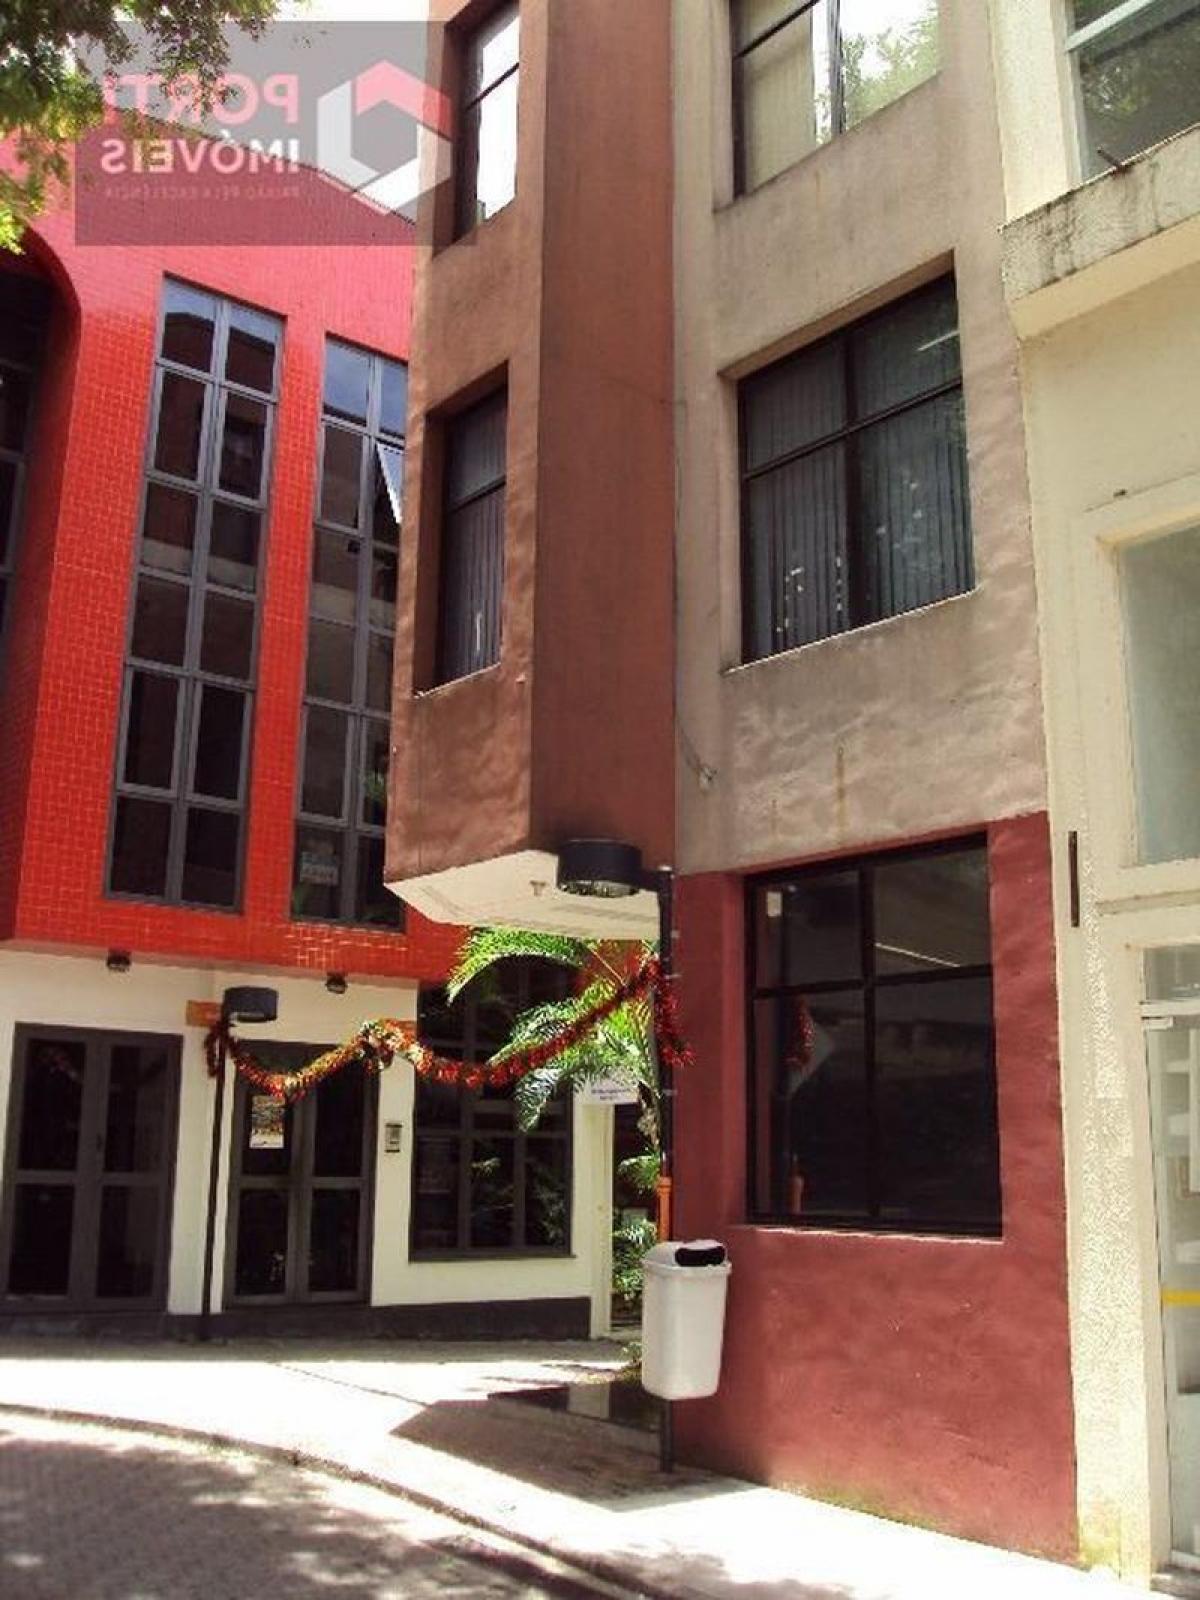 Picture of Commercial Building For Sale in Barueri, Sao Paulo, Brazil